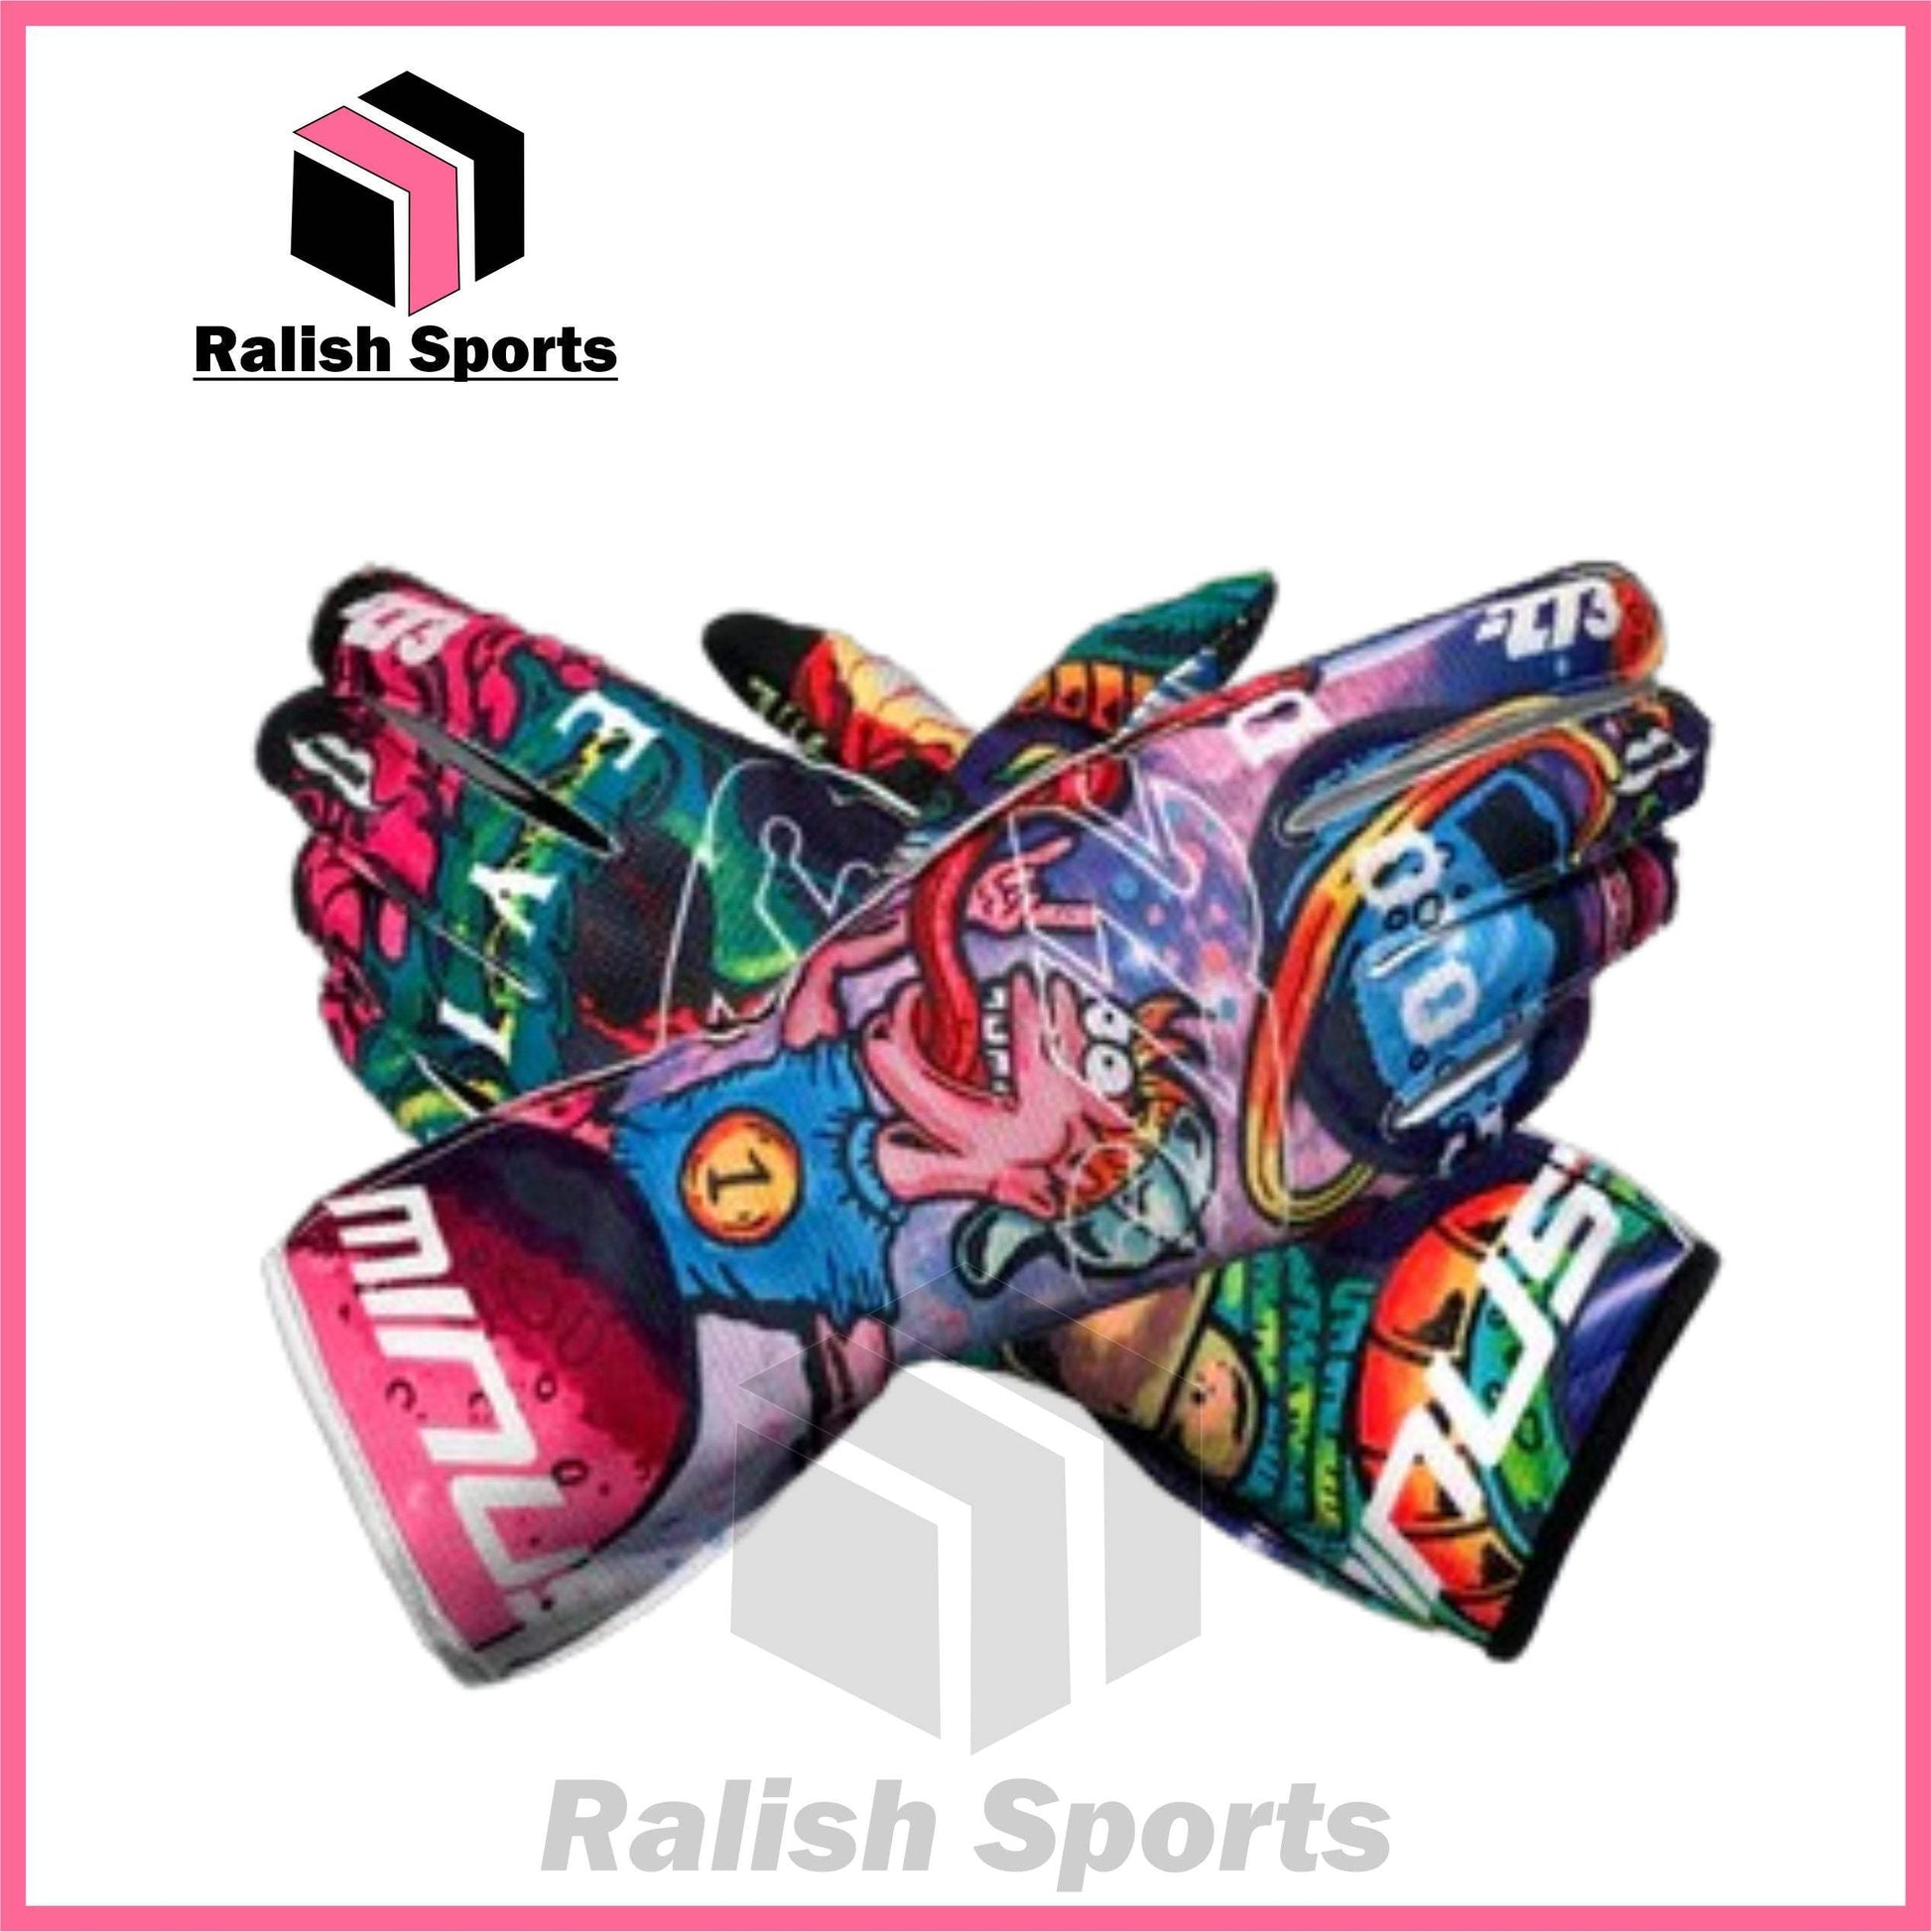 INTERGALACTIC -273 x Mad56 - Ralish Sports